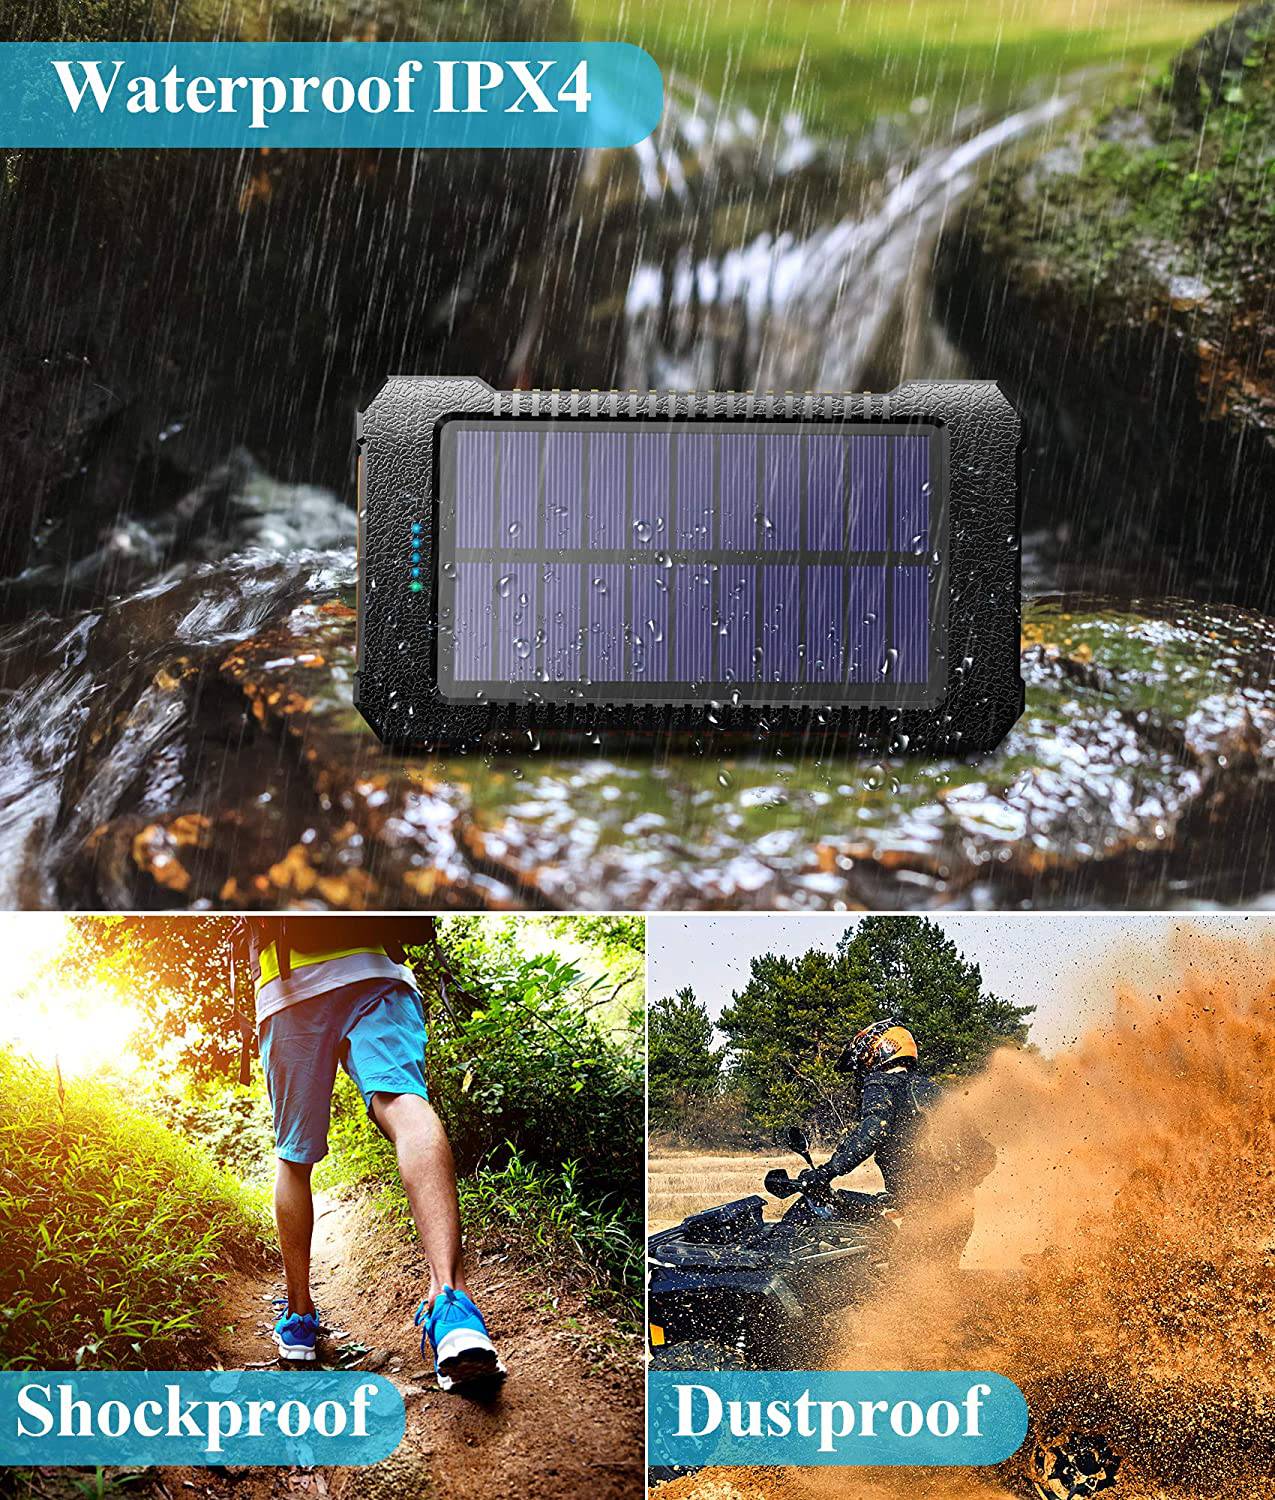 Solar Power Bank Portable 26800mAh Phone Charger - Fast Charging Battery - SKINMOZ MARKET